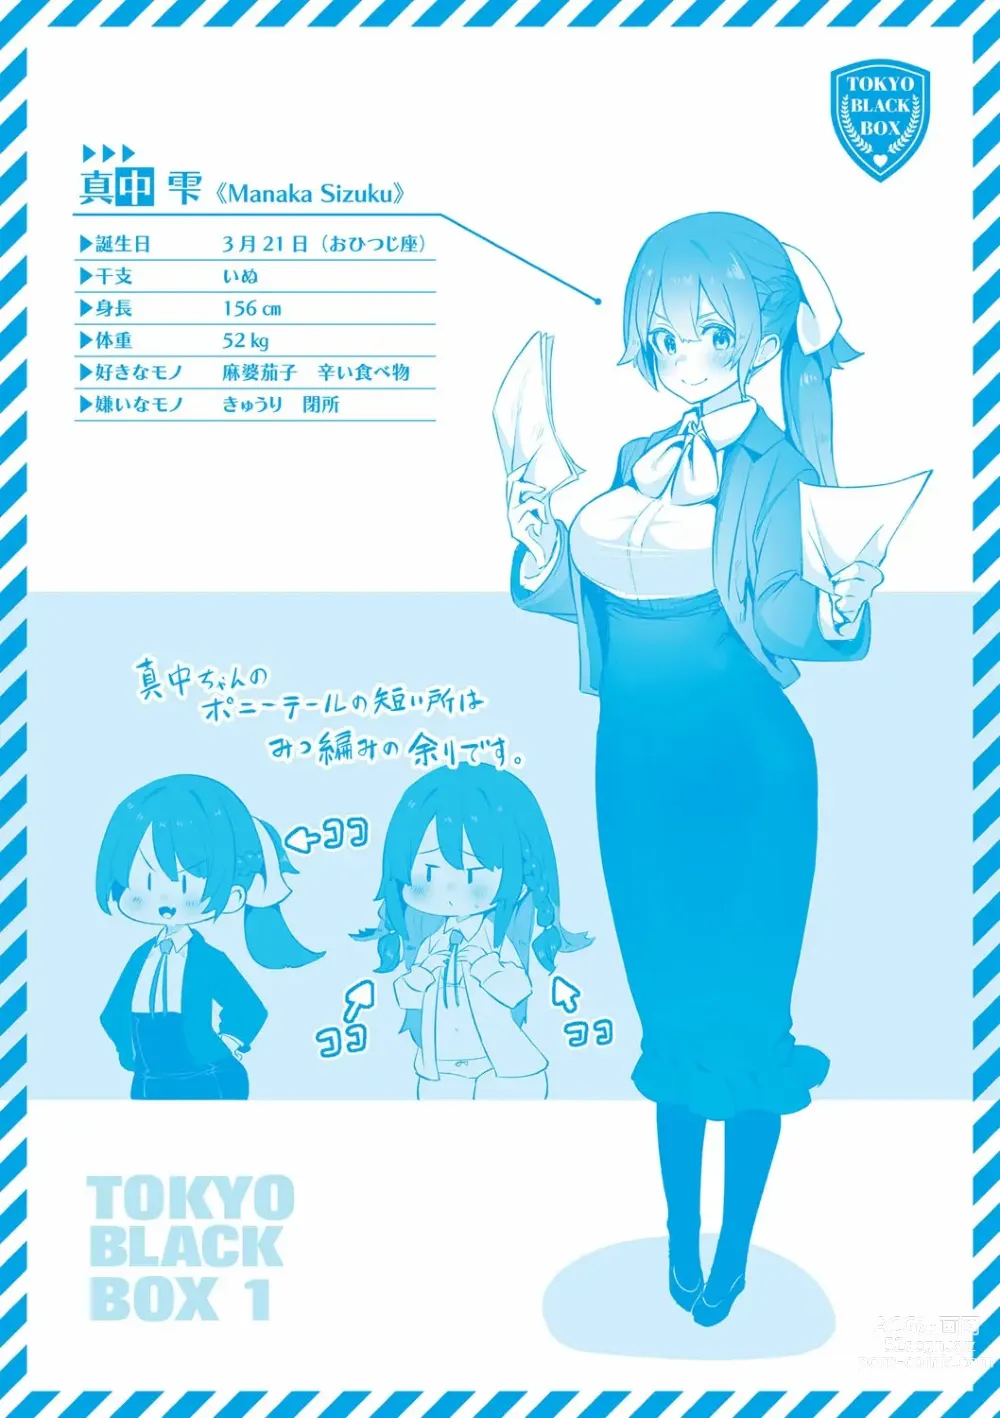 Page 207 of manga Tokyo Black Box 1